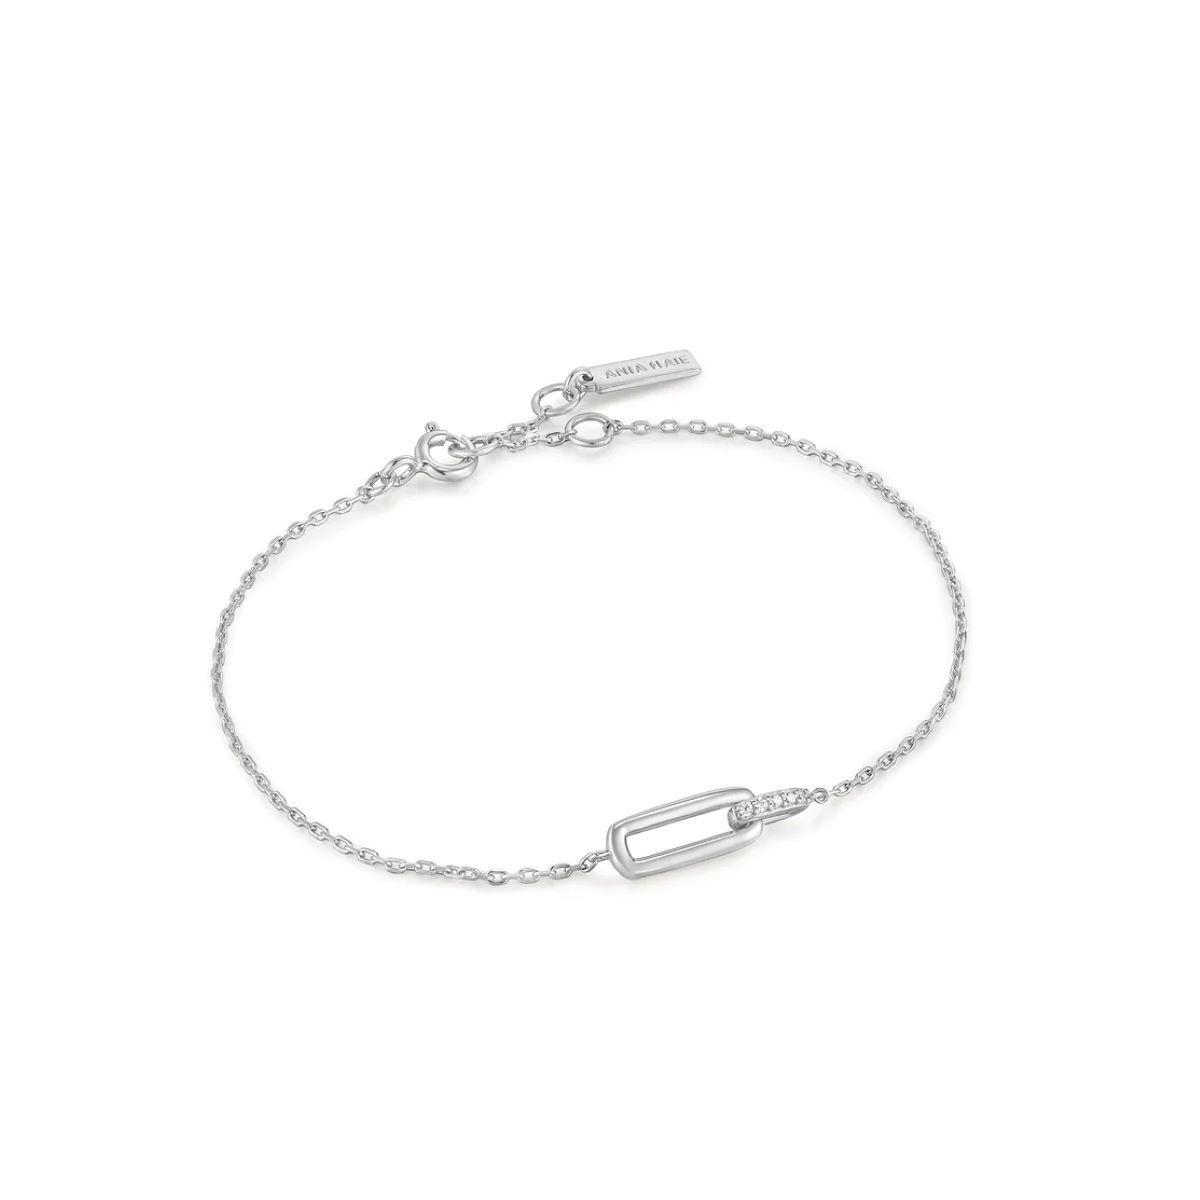 Ania Haie Silver Glam Interlock Bracelet - B037-01H